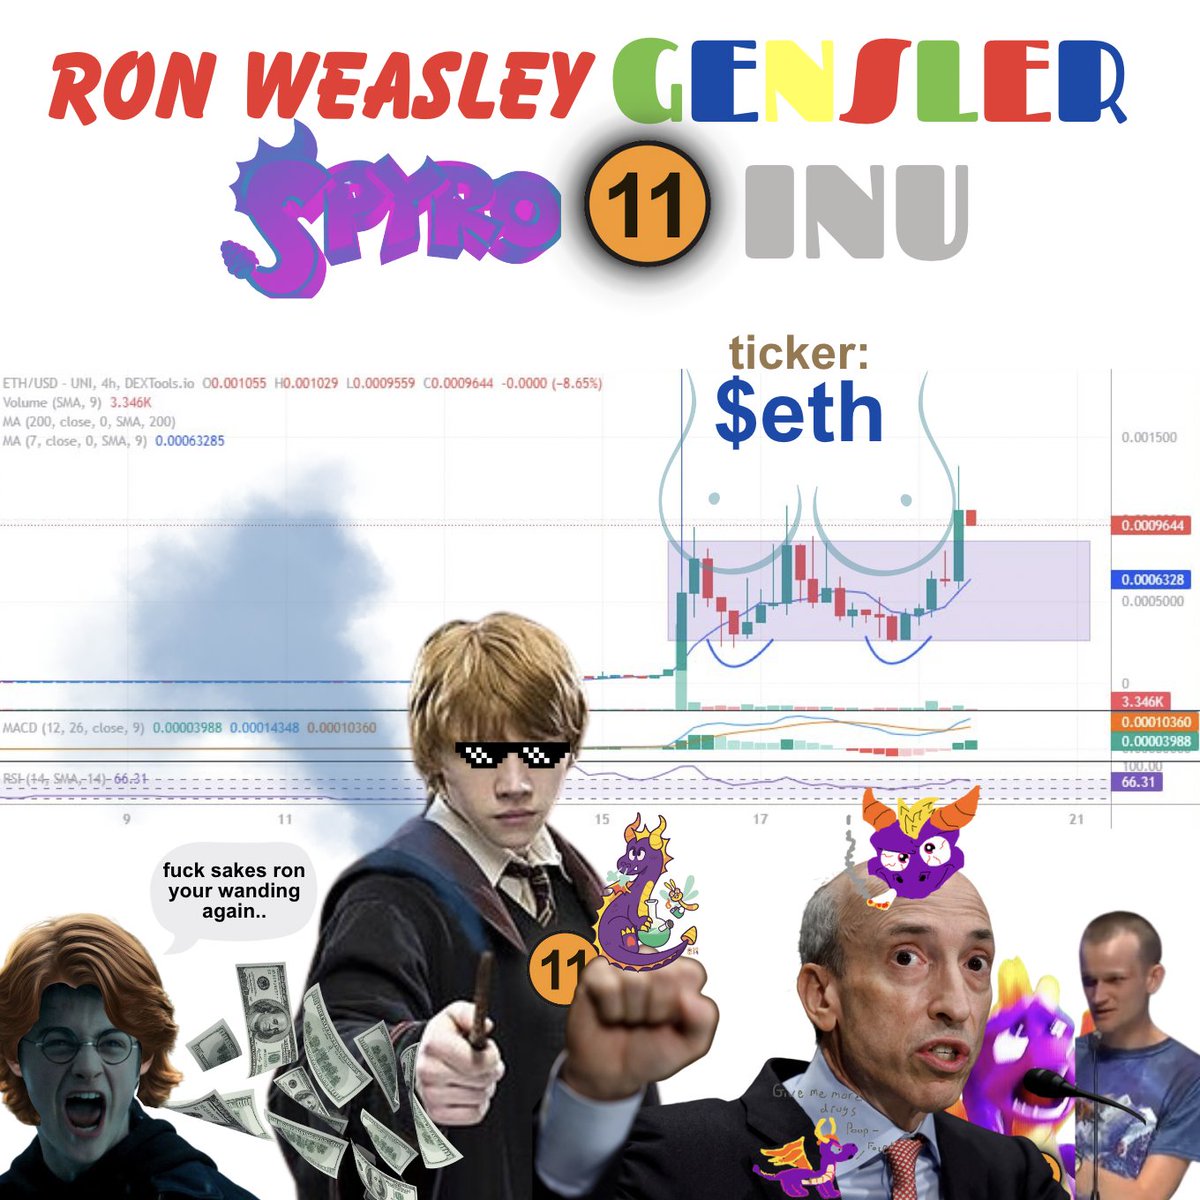 #RonWeasleyGenslerSpyro11Inu ticker is $eth.
chart titties ftw. ginger wizards ftw. 
#SPREMLINS_ARE_CUMMING 💦 oo mystery gateways.